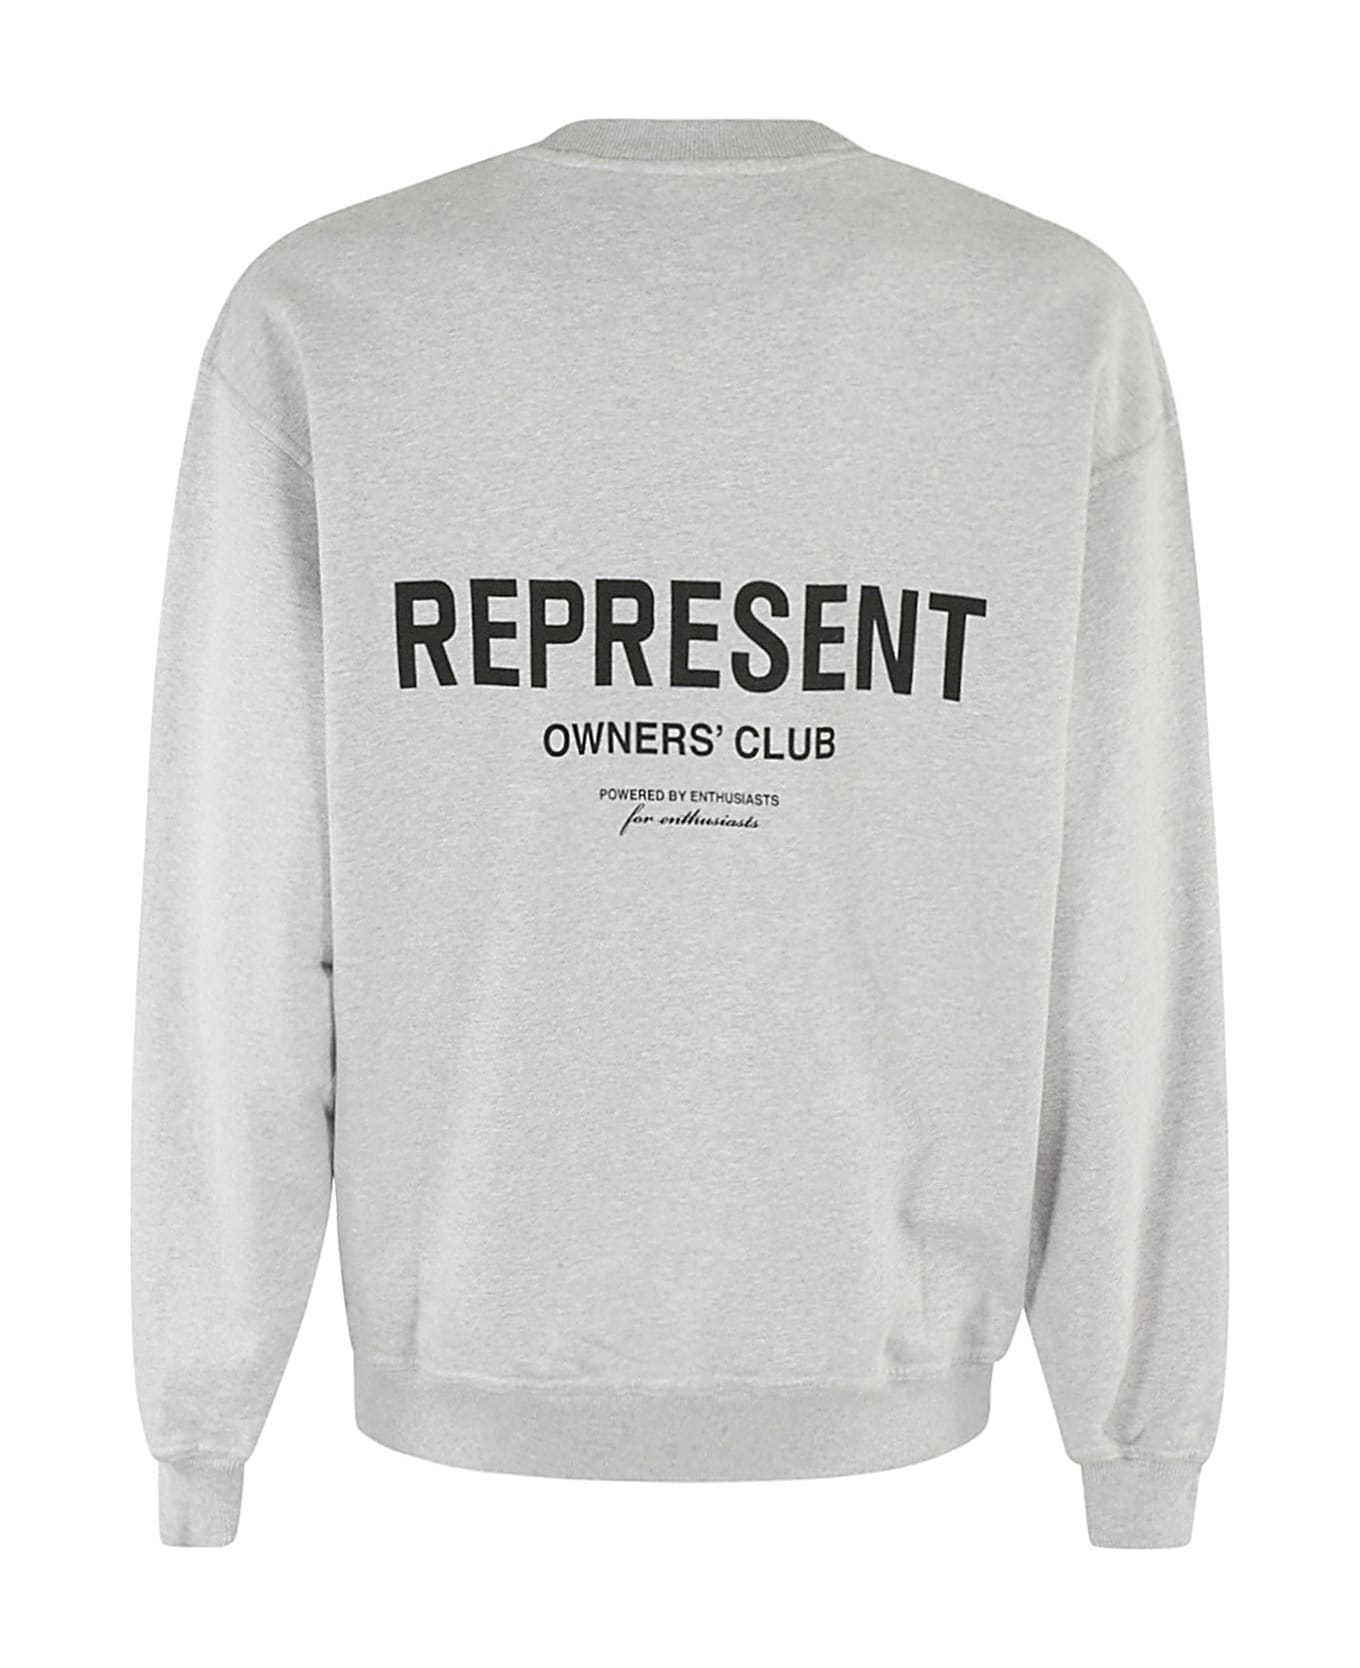 REPRESENT Owners Club Sweater - Ash Grey Black